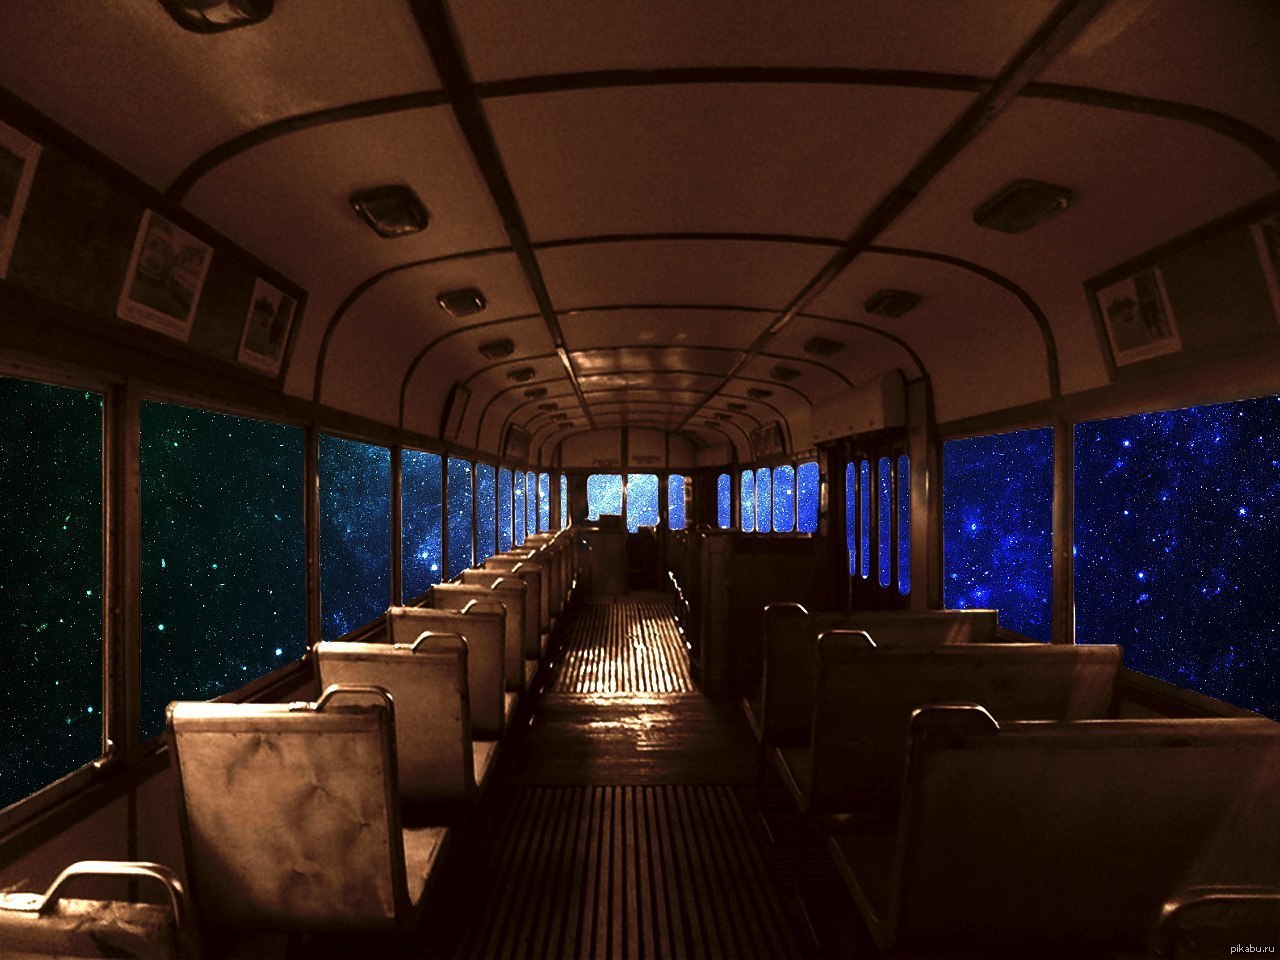 Вид внутри. Вид из автобуса. Ночной автобус внутри. Космический трамвай. Трамвай в космосе.